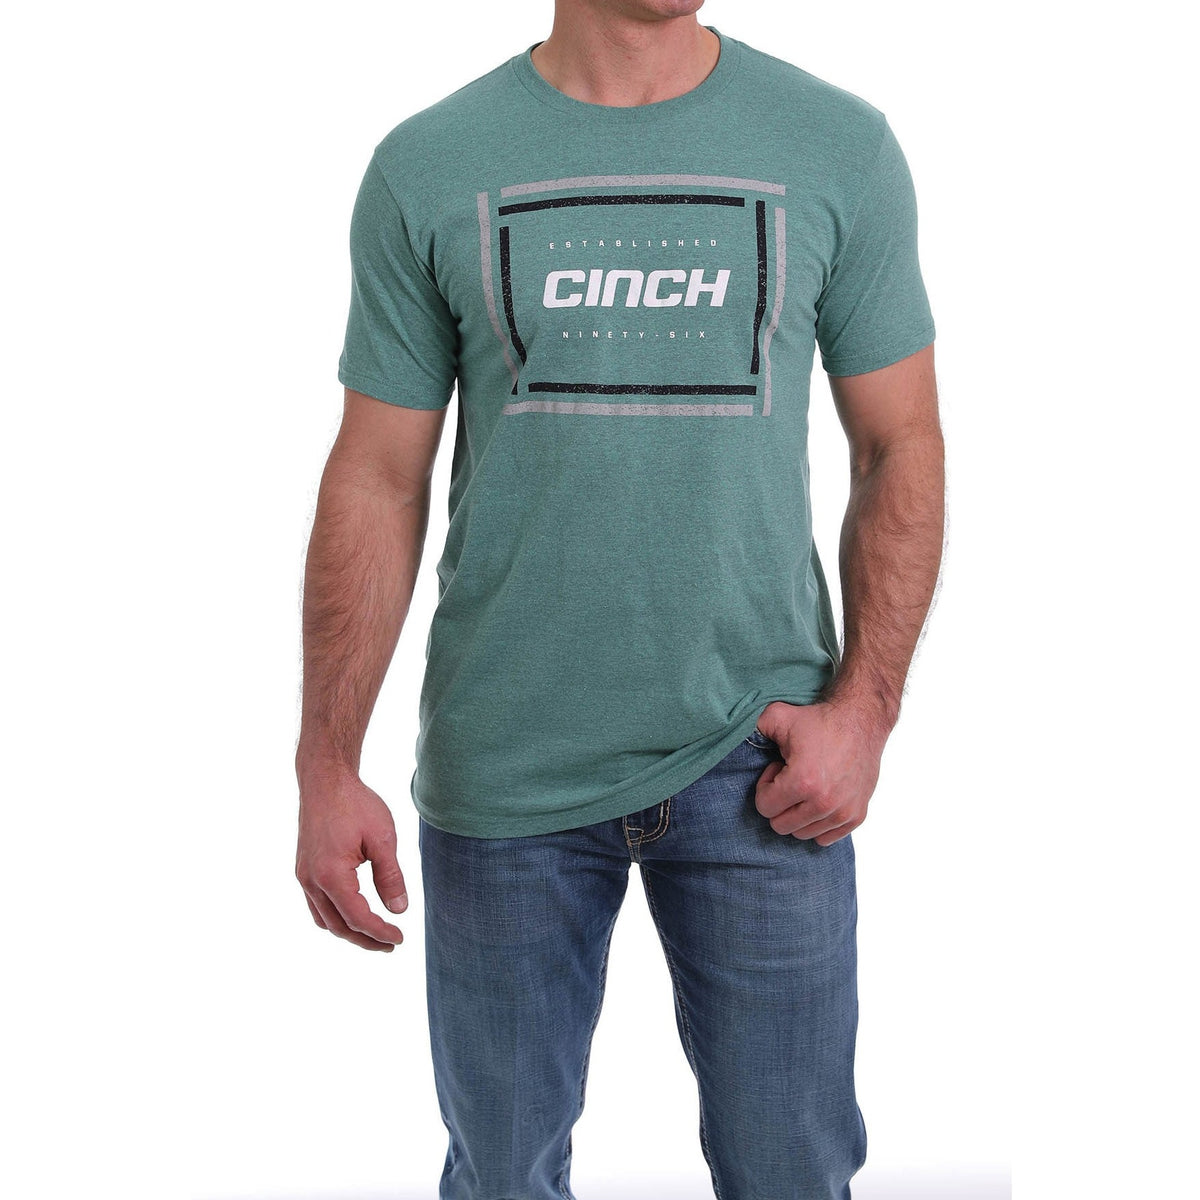 Cinch Men's Heather Green Screen Print T-Shirt